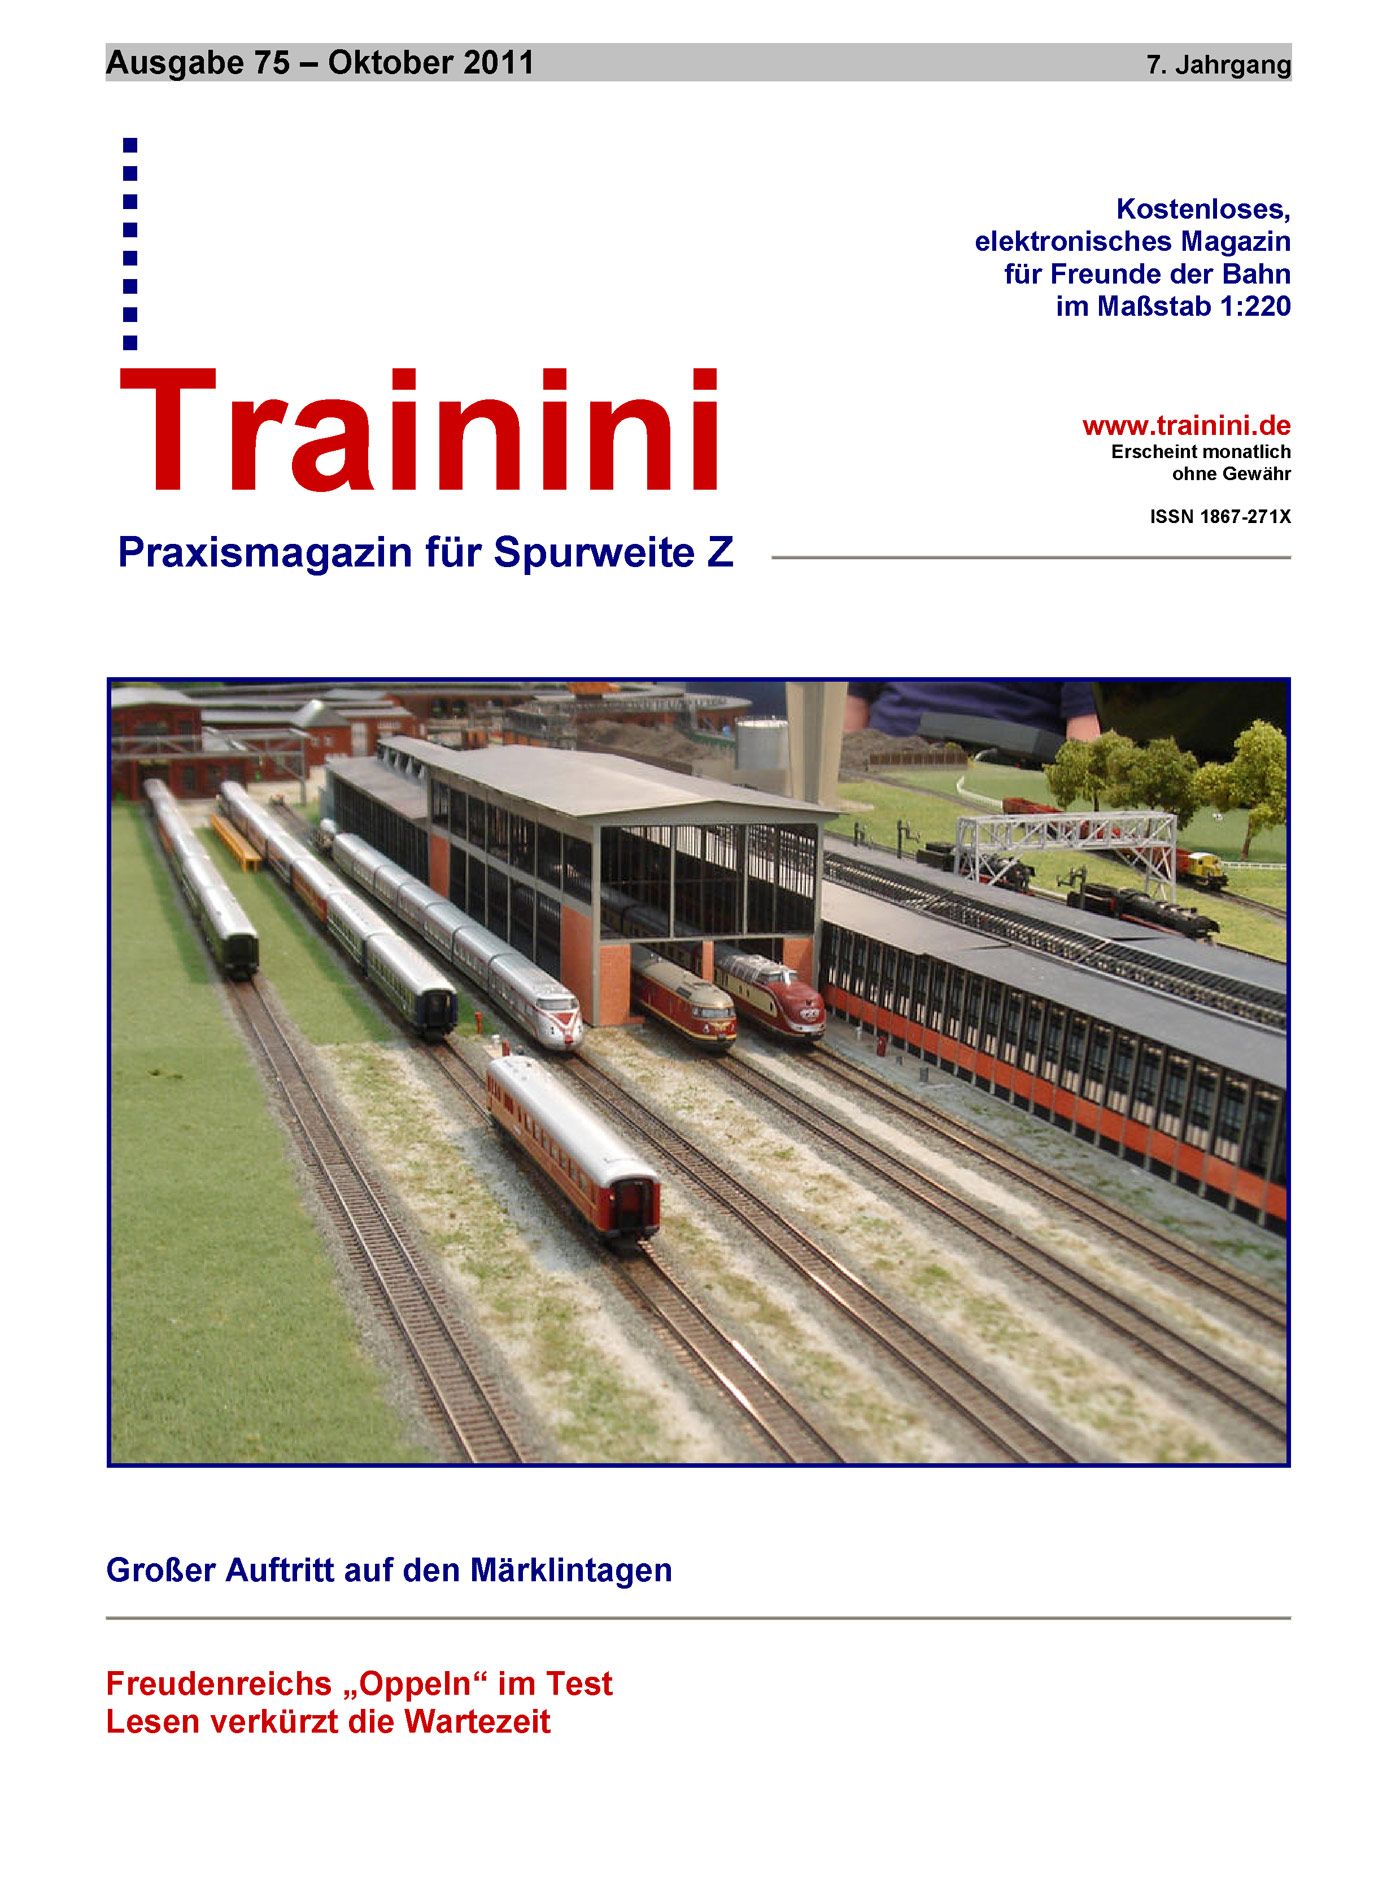 Trainini Ausgabe Oktober 2011